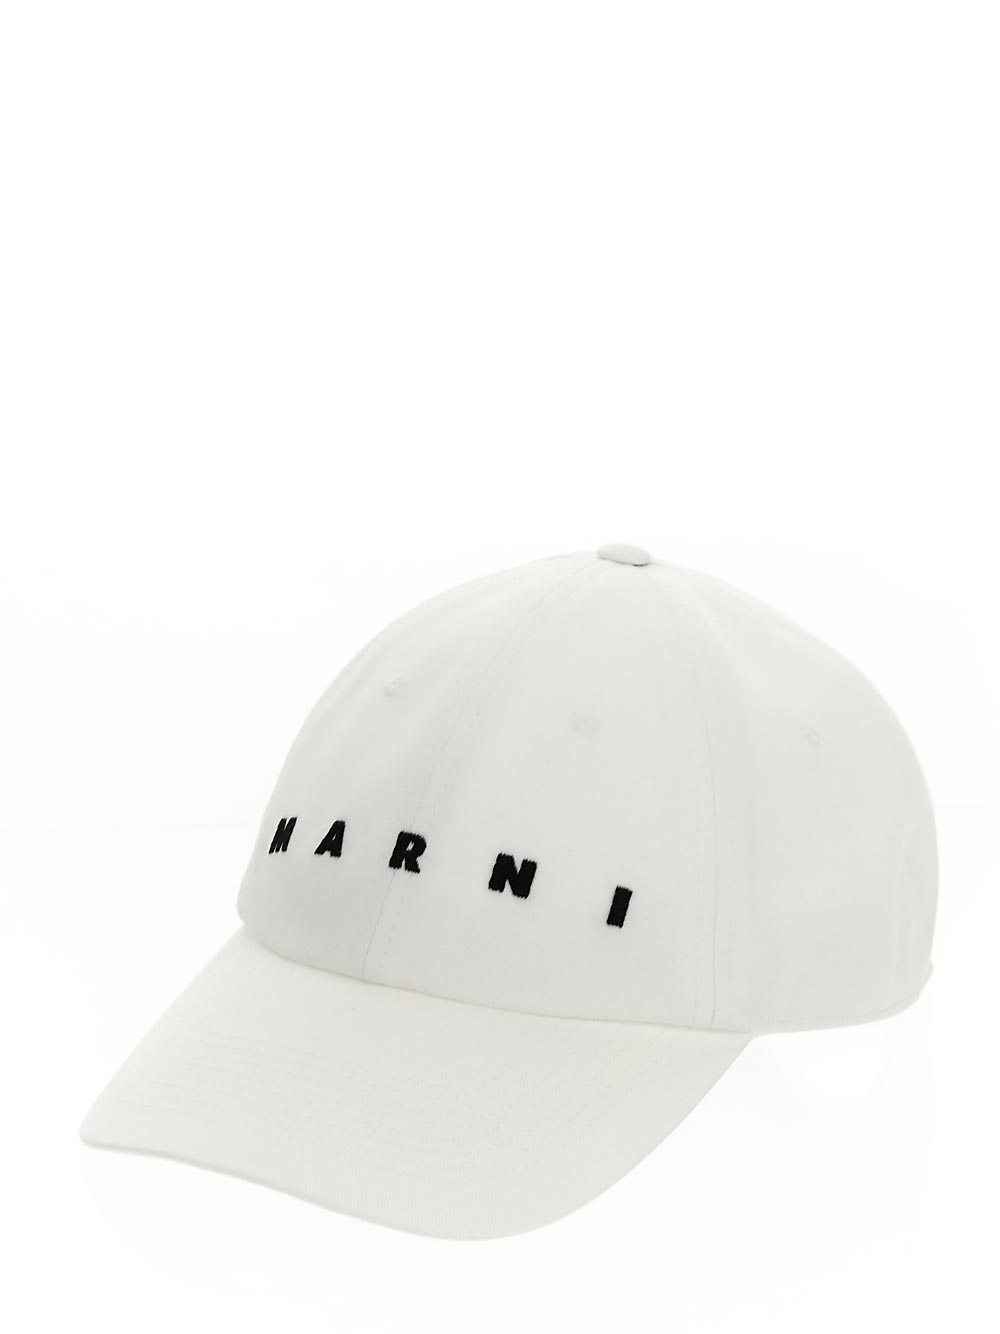 Marni White Bio Gabardine Cap With Embroidered Logo